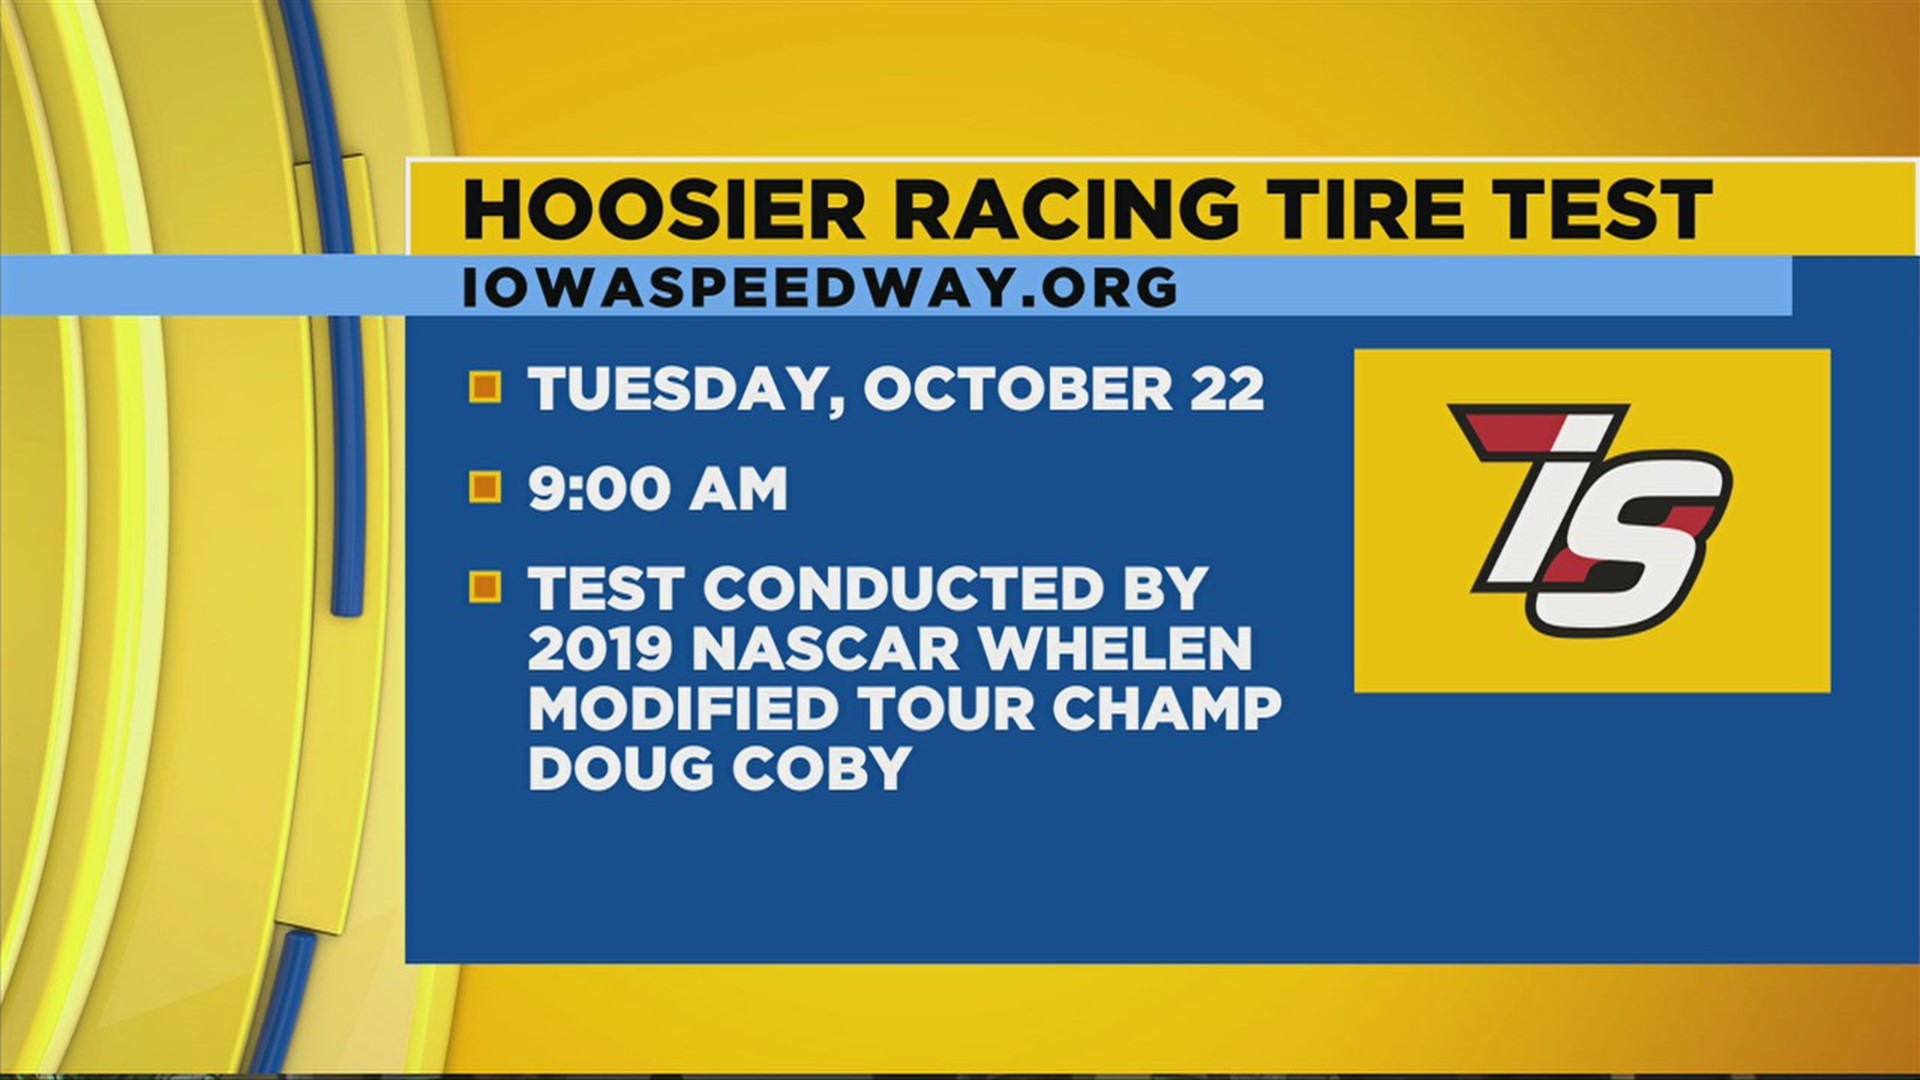 Iowa Speedway's Hoosier Racing Tire test on Tuesday, Oct. 22